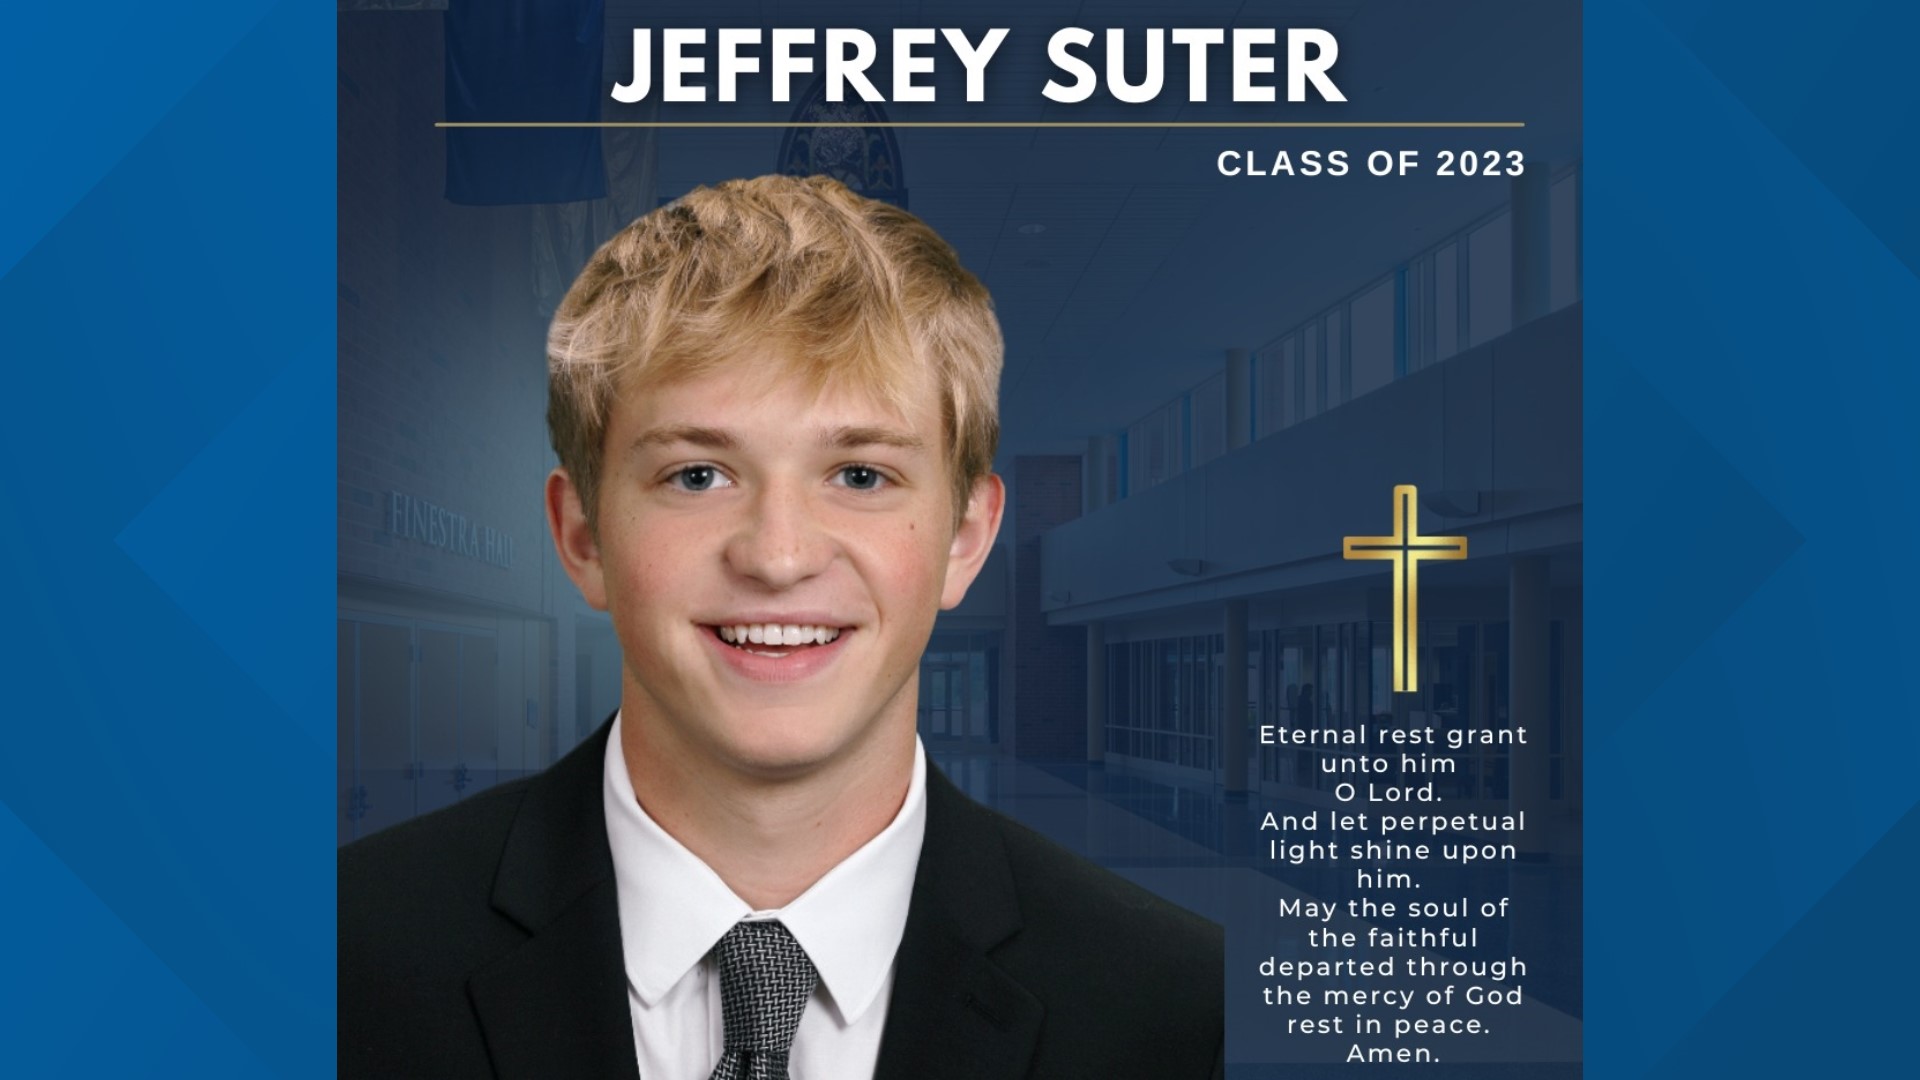 Jeffery Suter, 18, was pronounced dead at the scene.